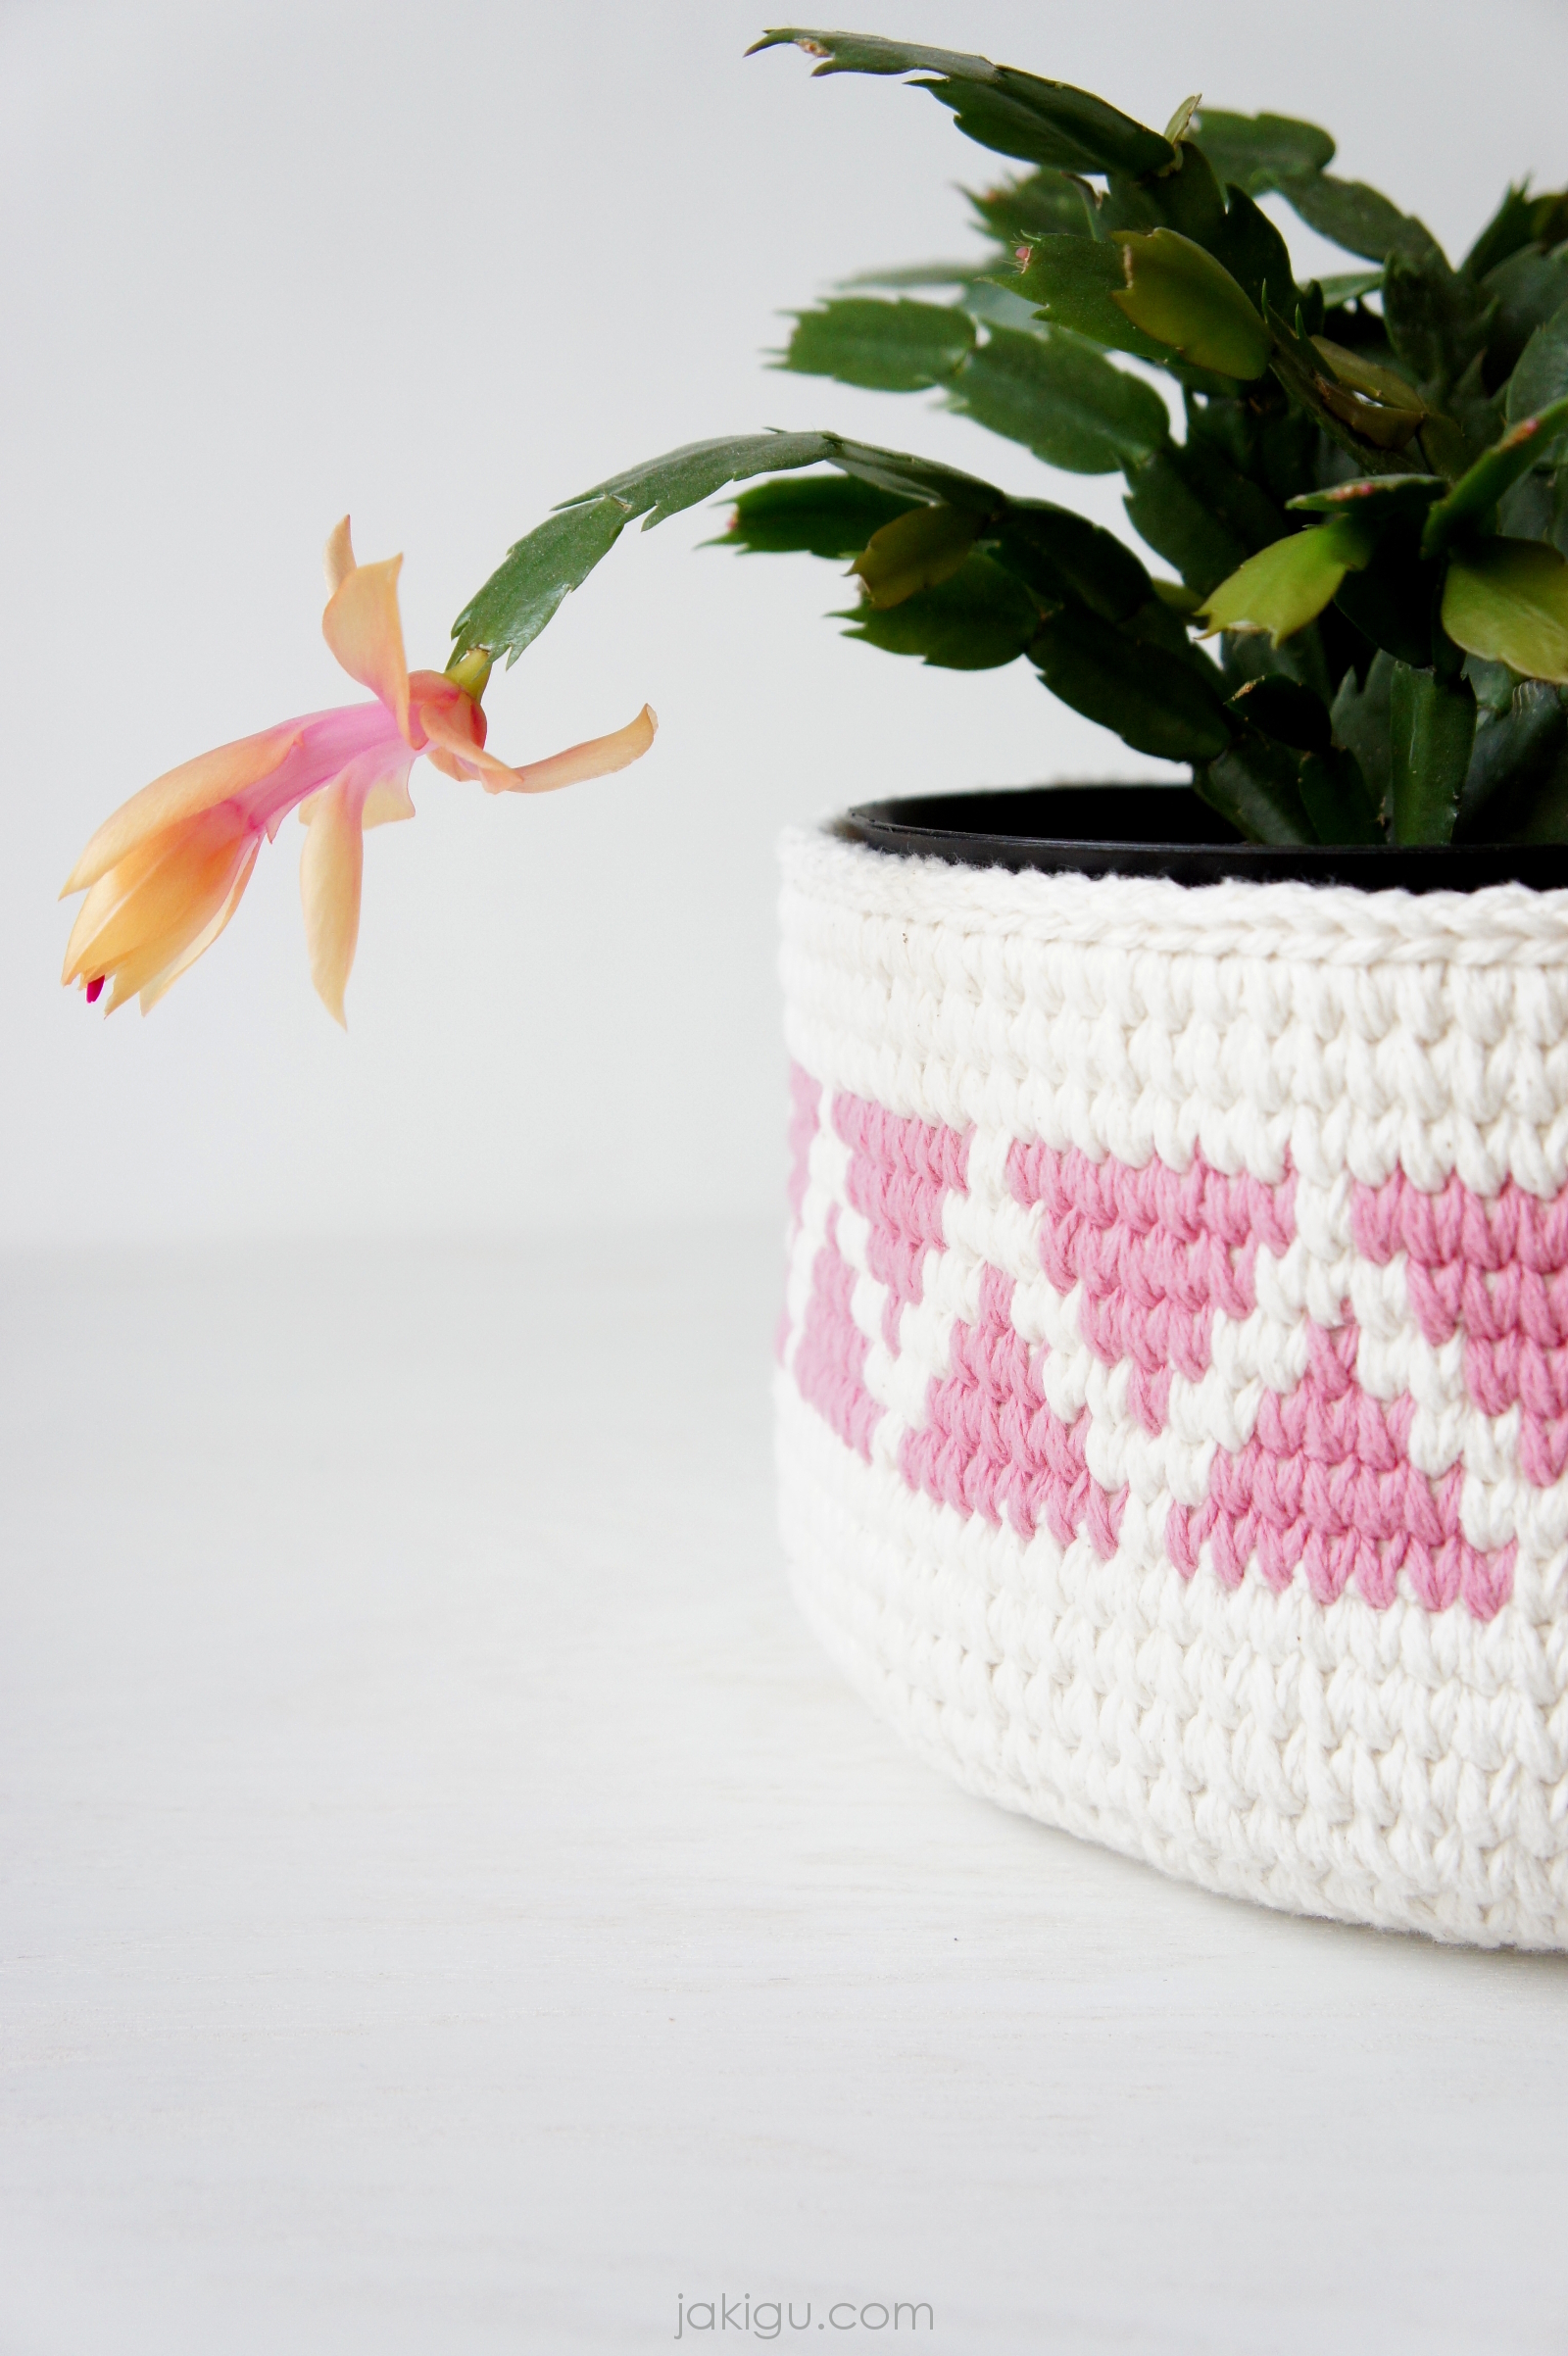 Crochet Basket or Planter with pink geometric detail | triangle chevron basket by jakigu.com